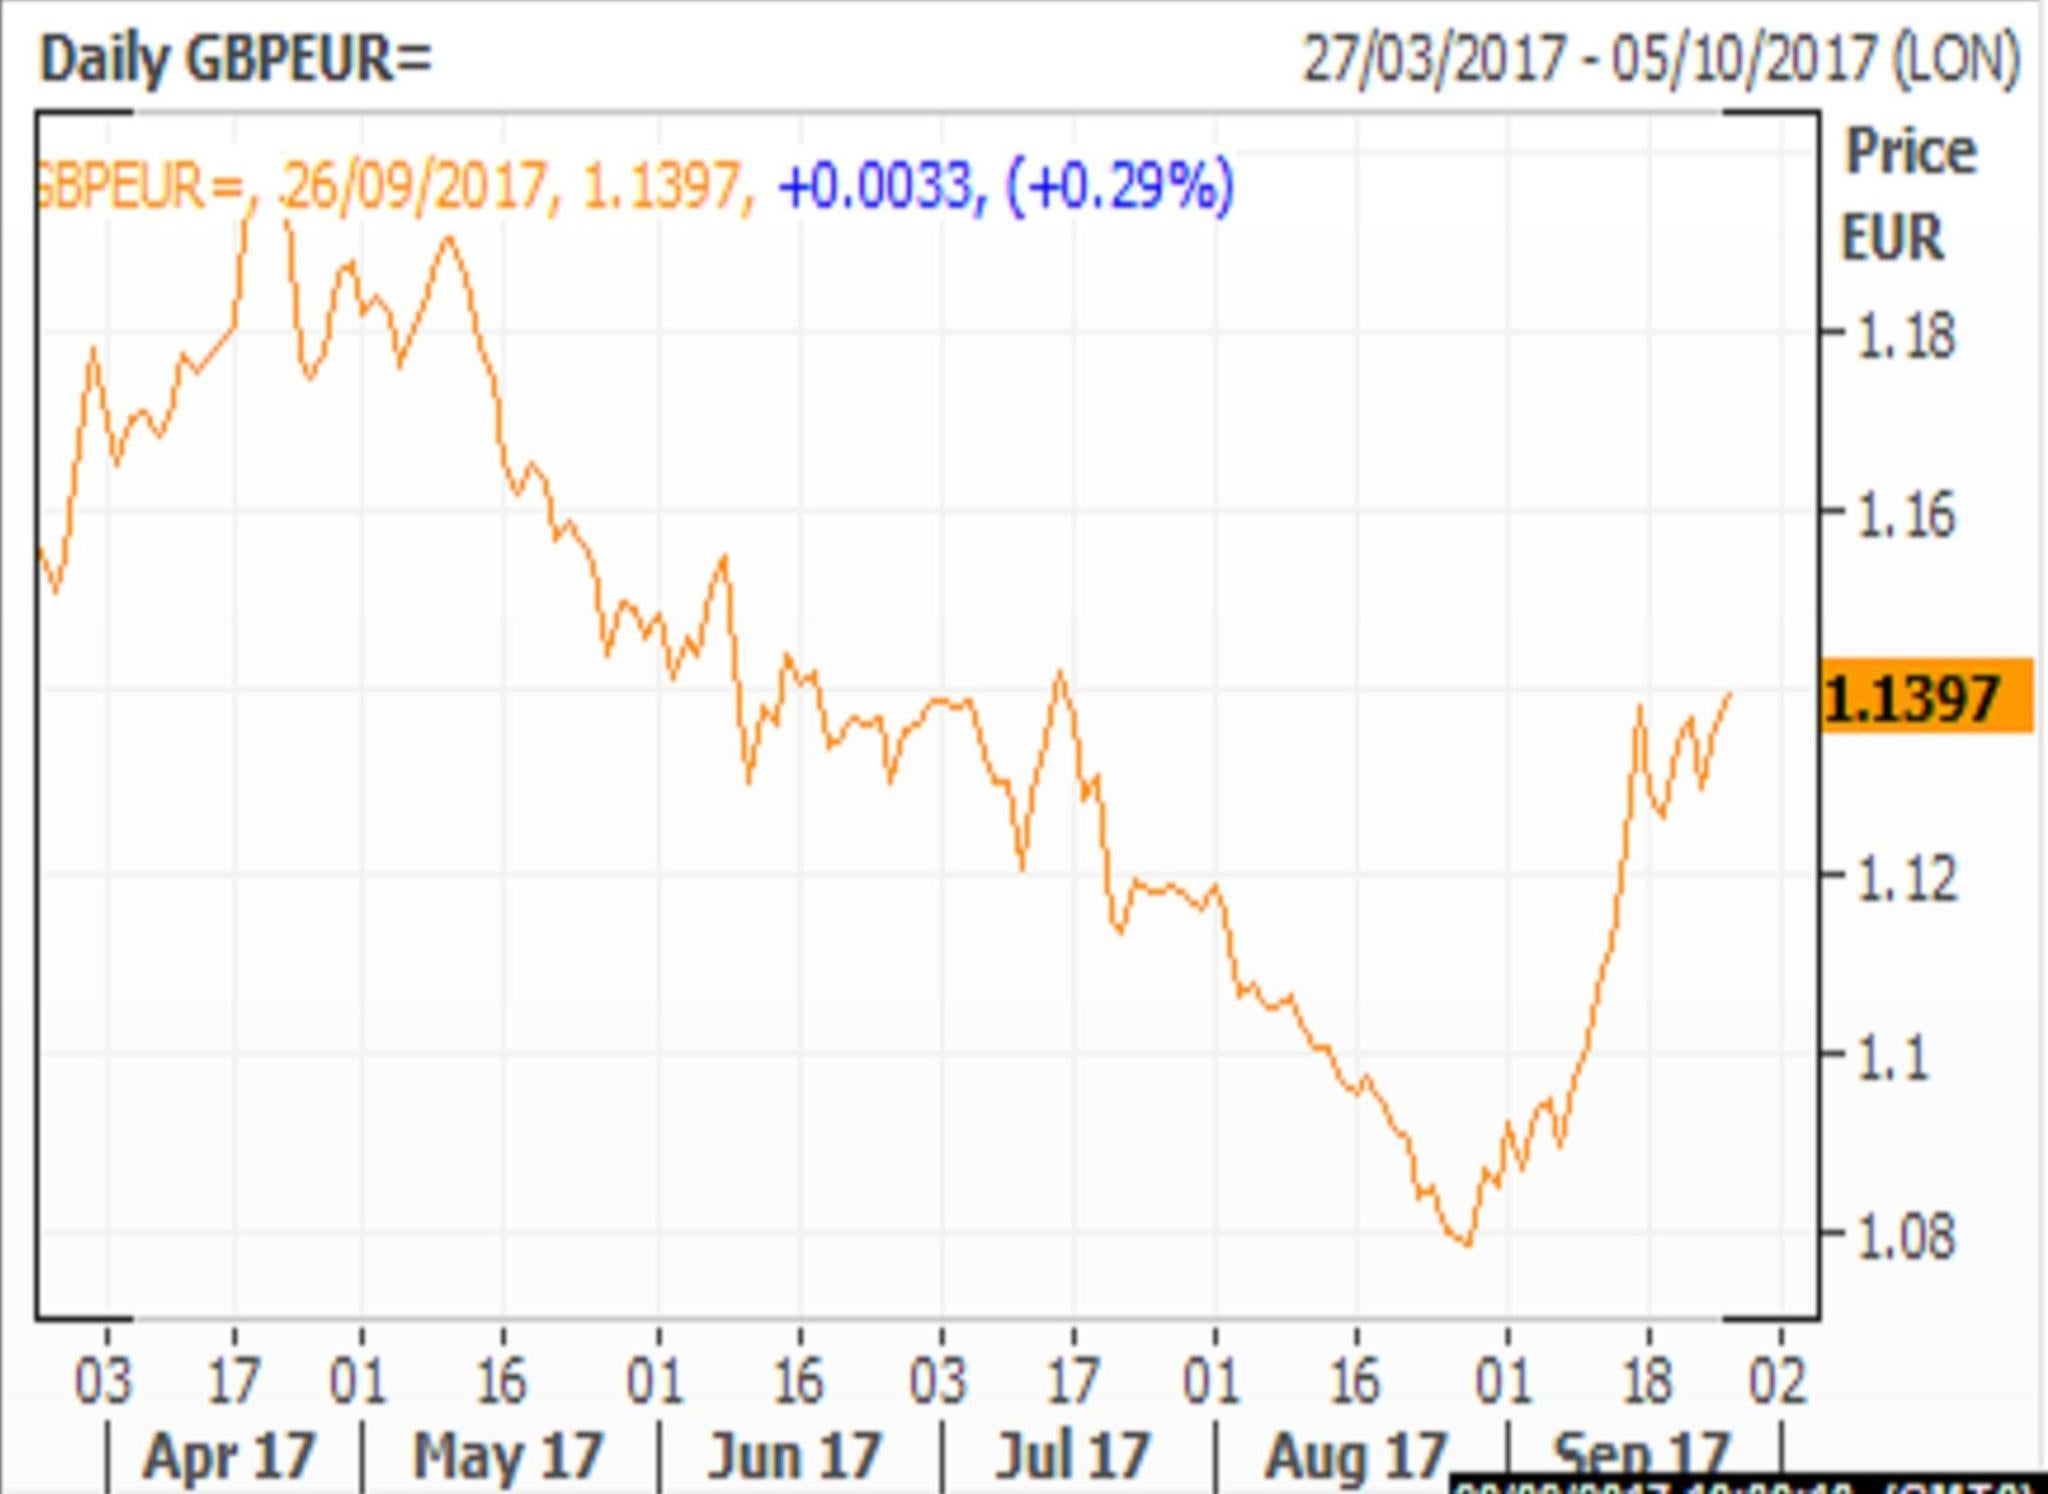 Pound Euro Chart 10 Years